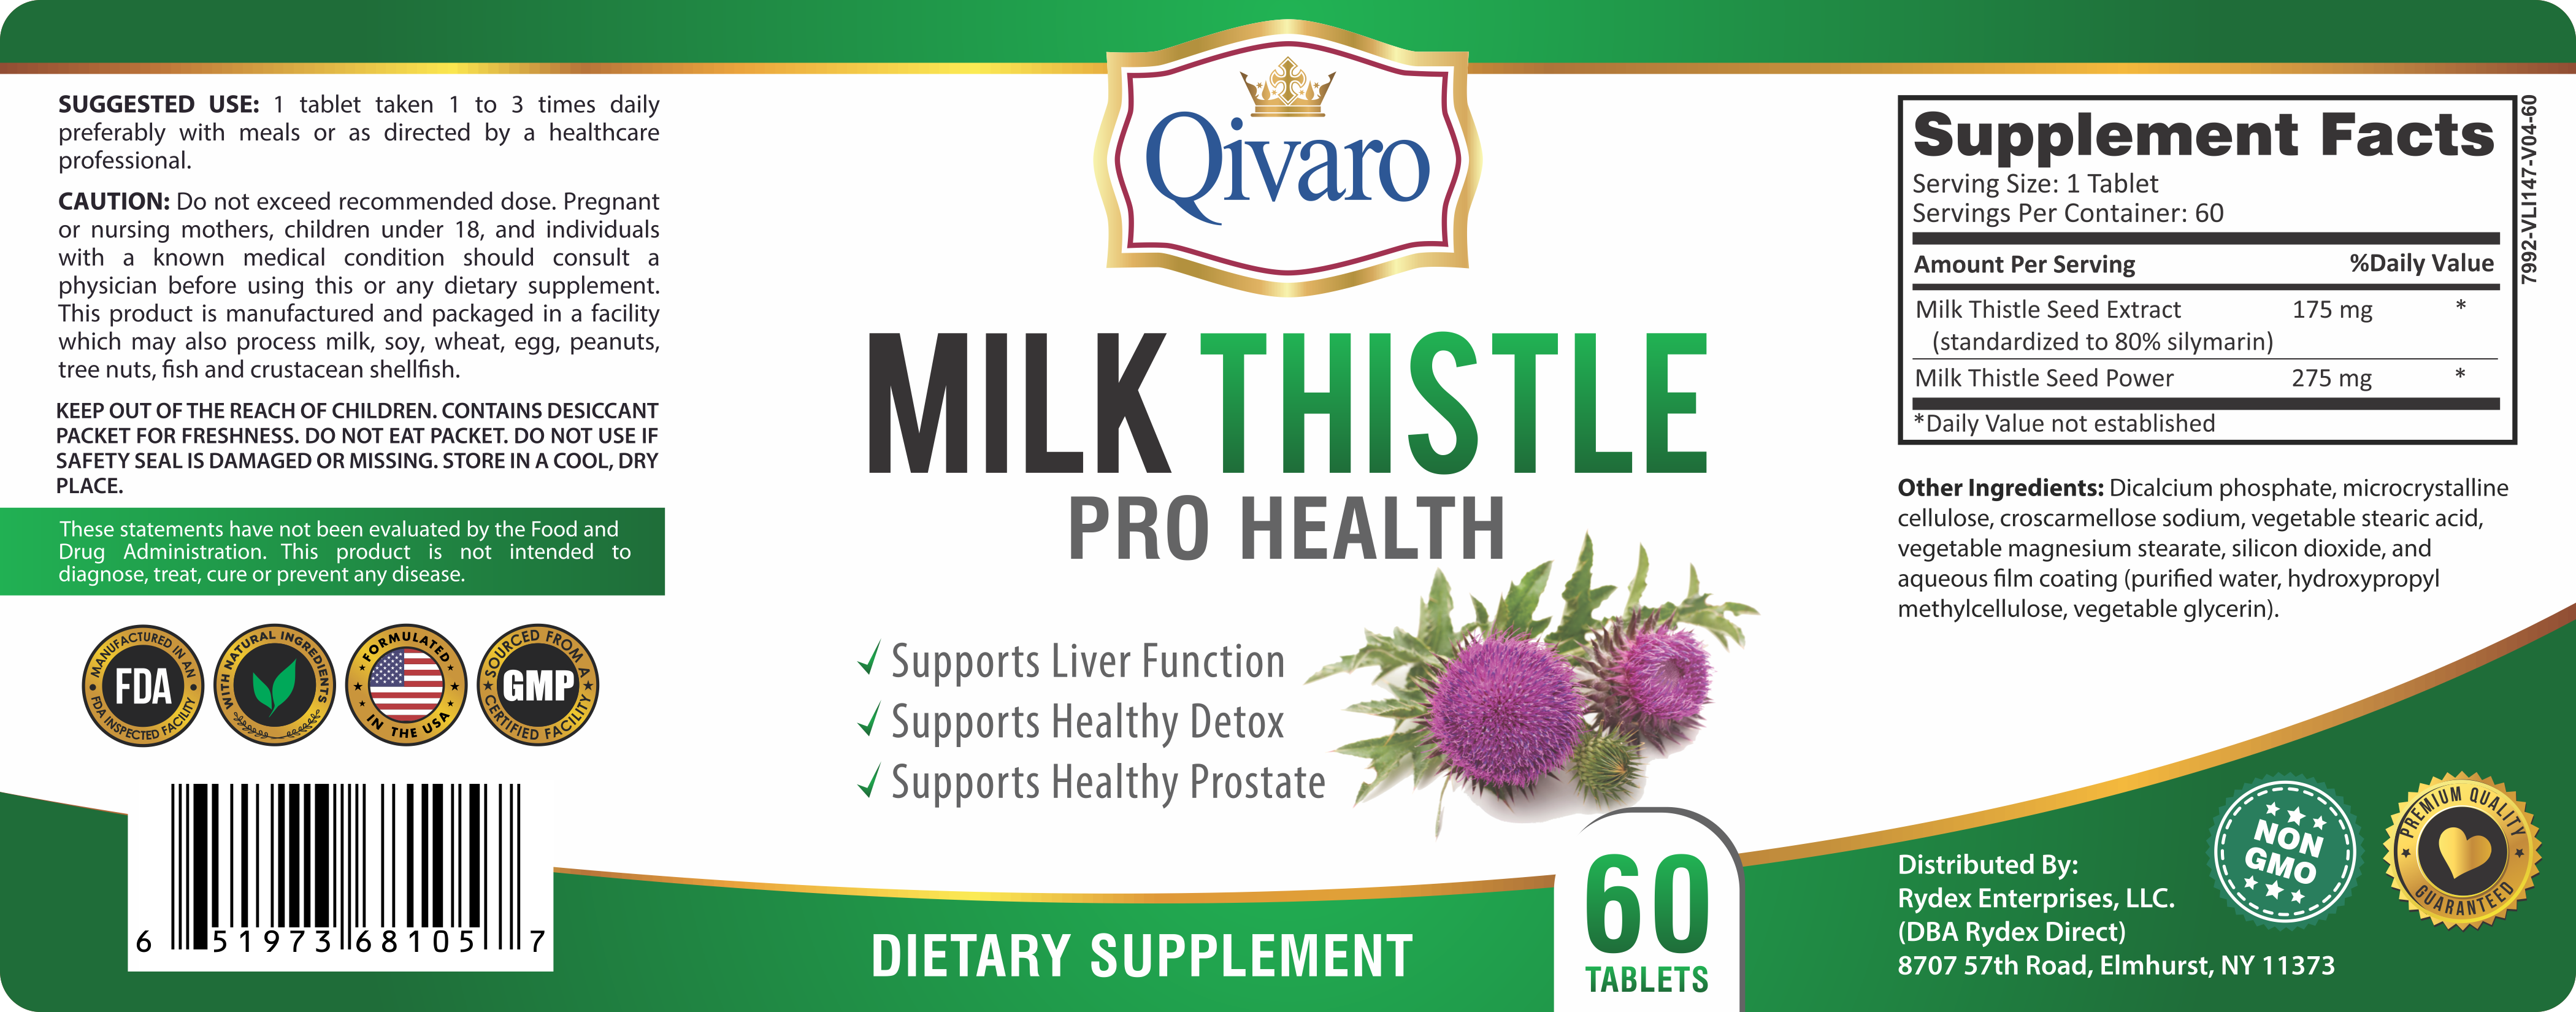 QIH27: Milk Thistle Pro Health